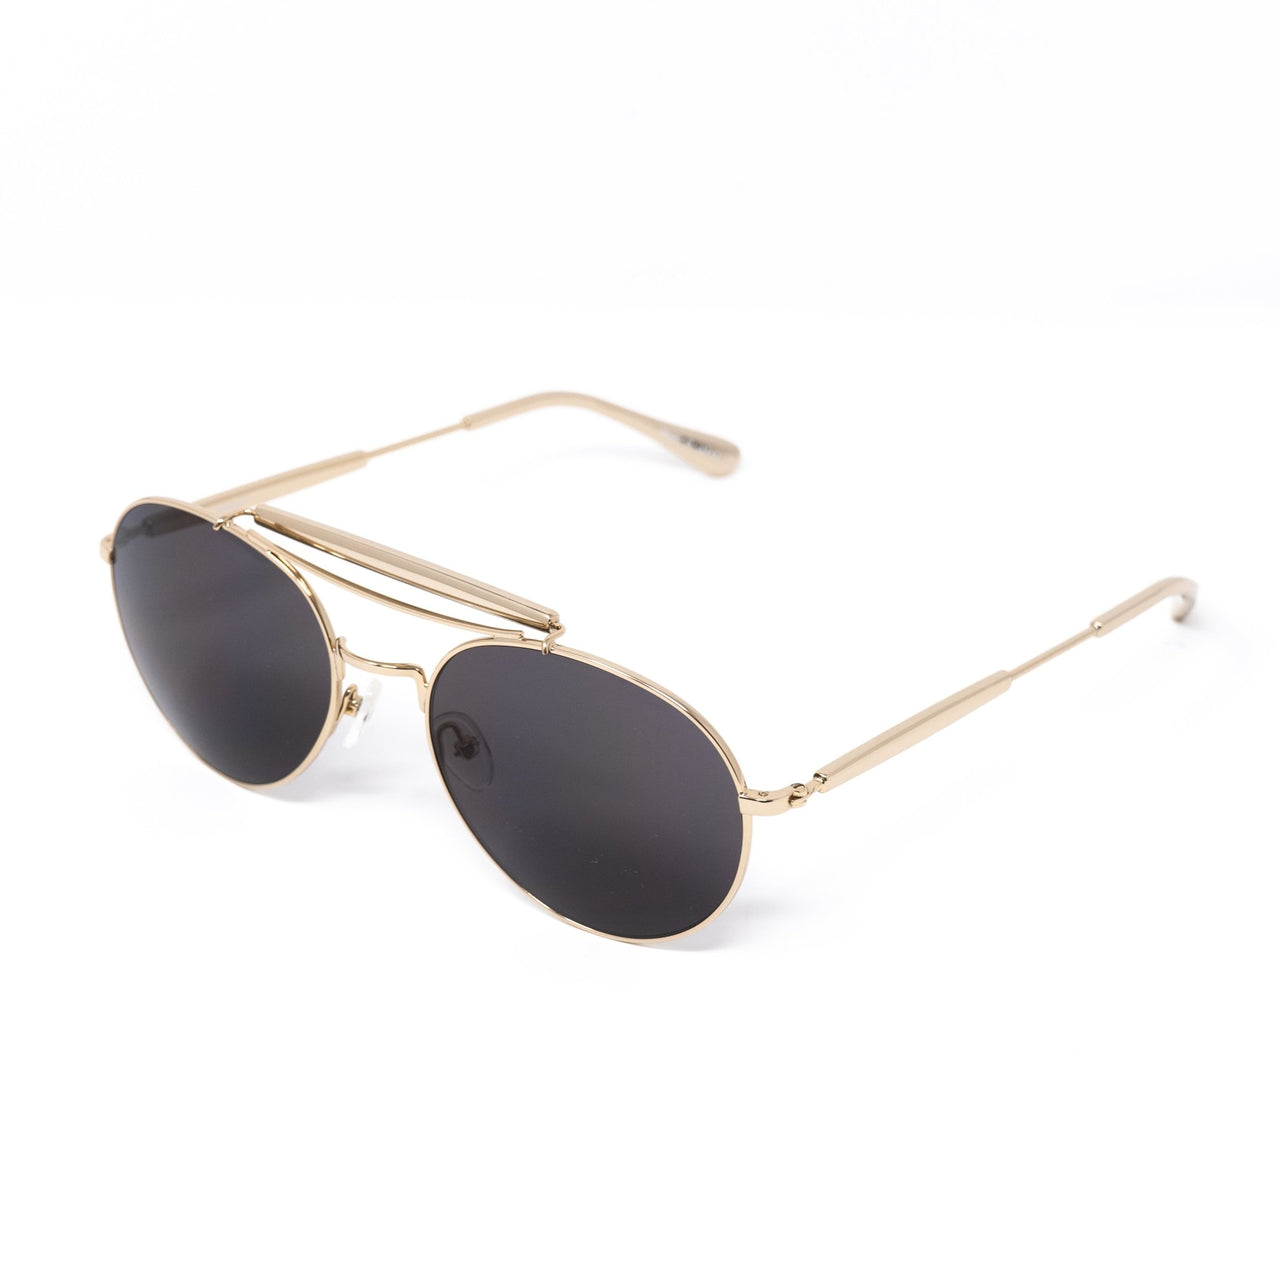 Yohji Yamamoto Unisex Sunglasses Round Gold and Dark Grey Lenses Category 3 - YY12RIDERC2SUN - Watches & Crystals